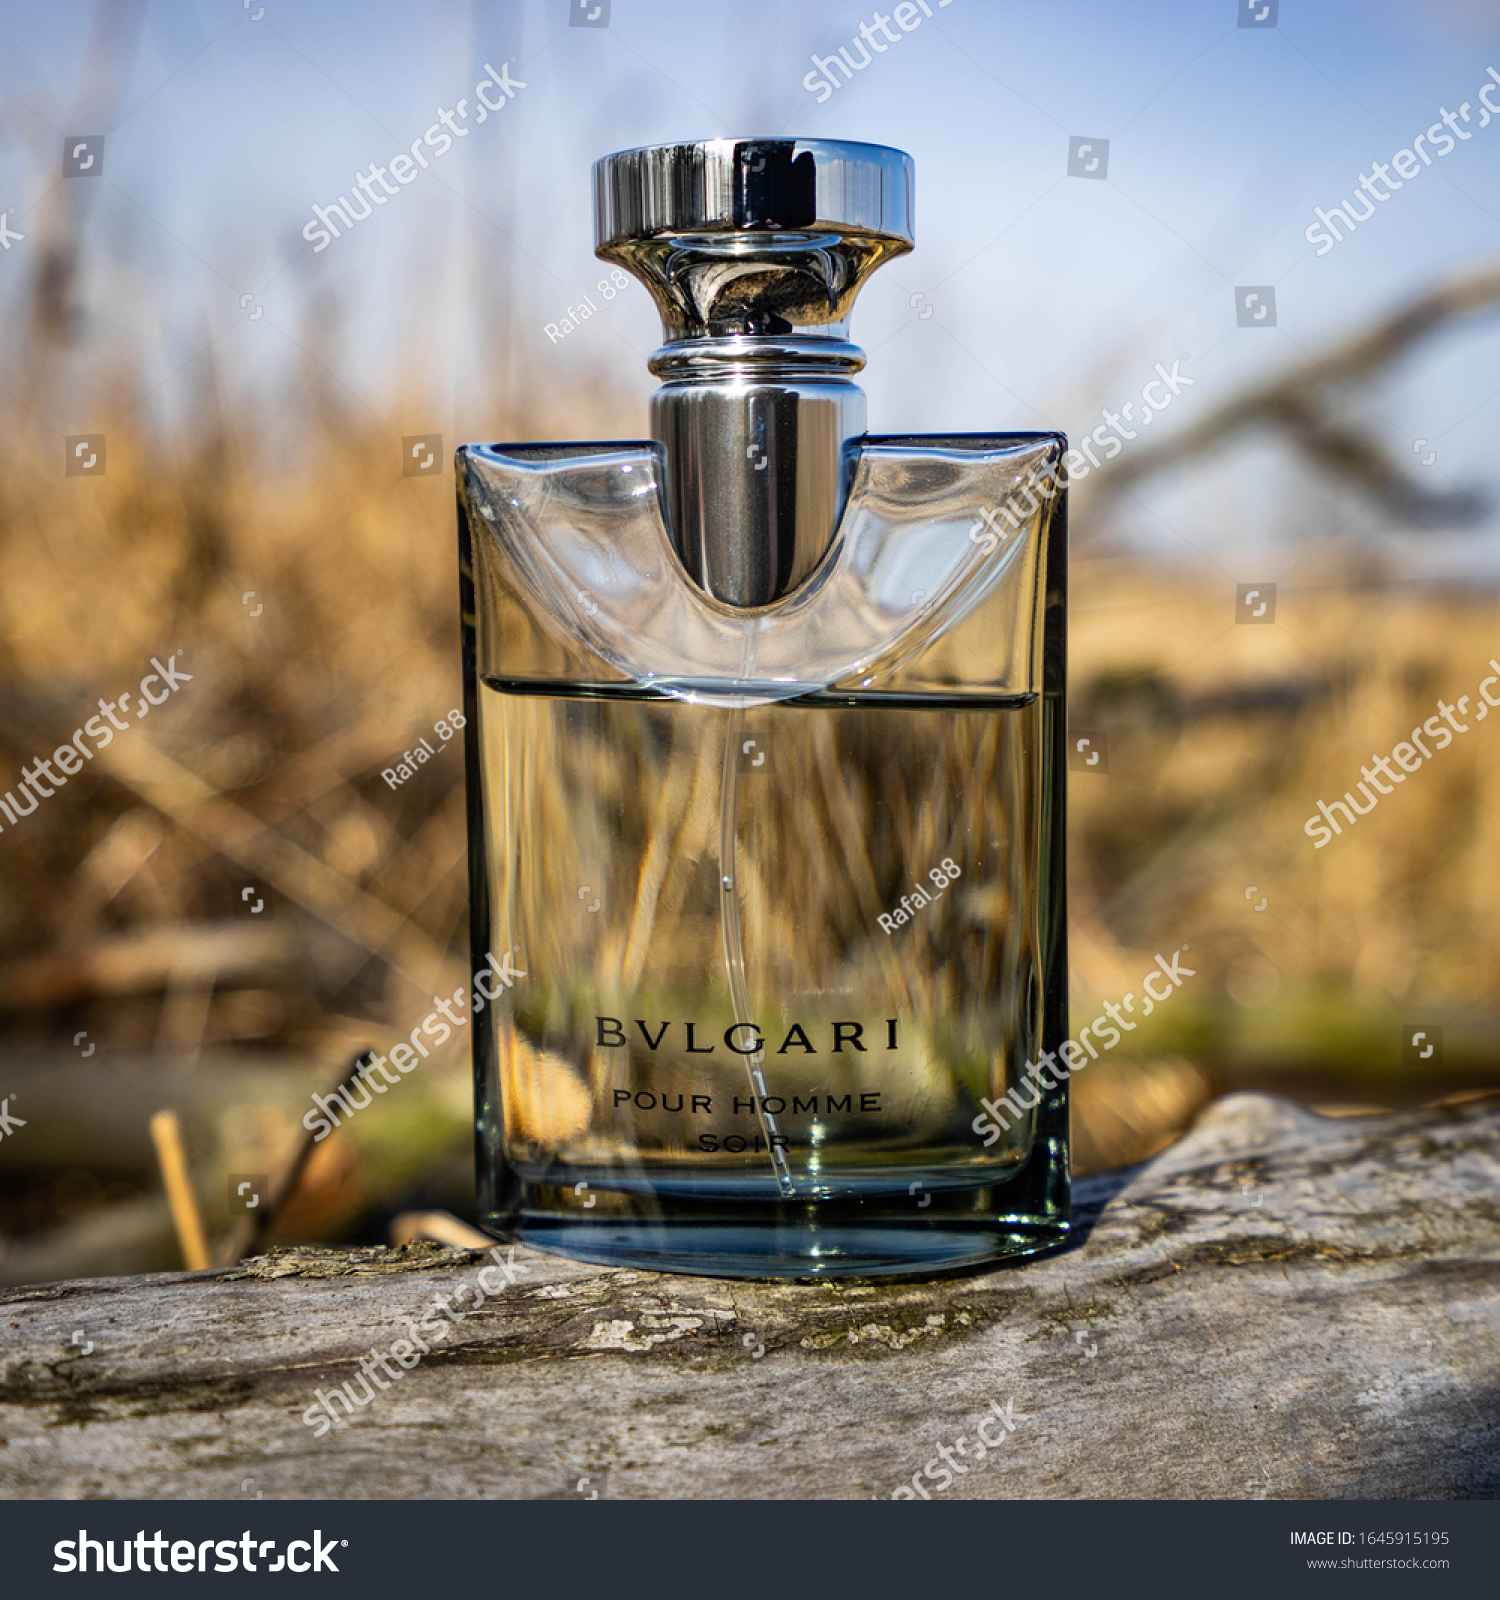 bvlgari soir perfume